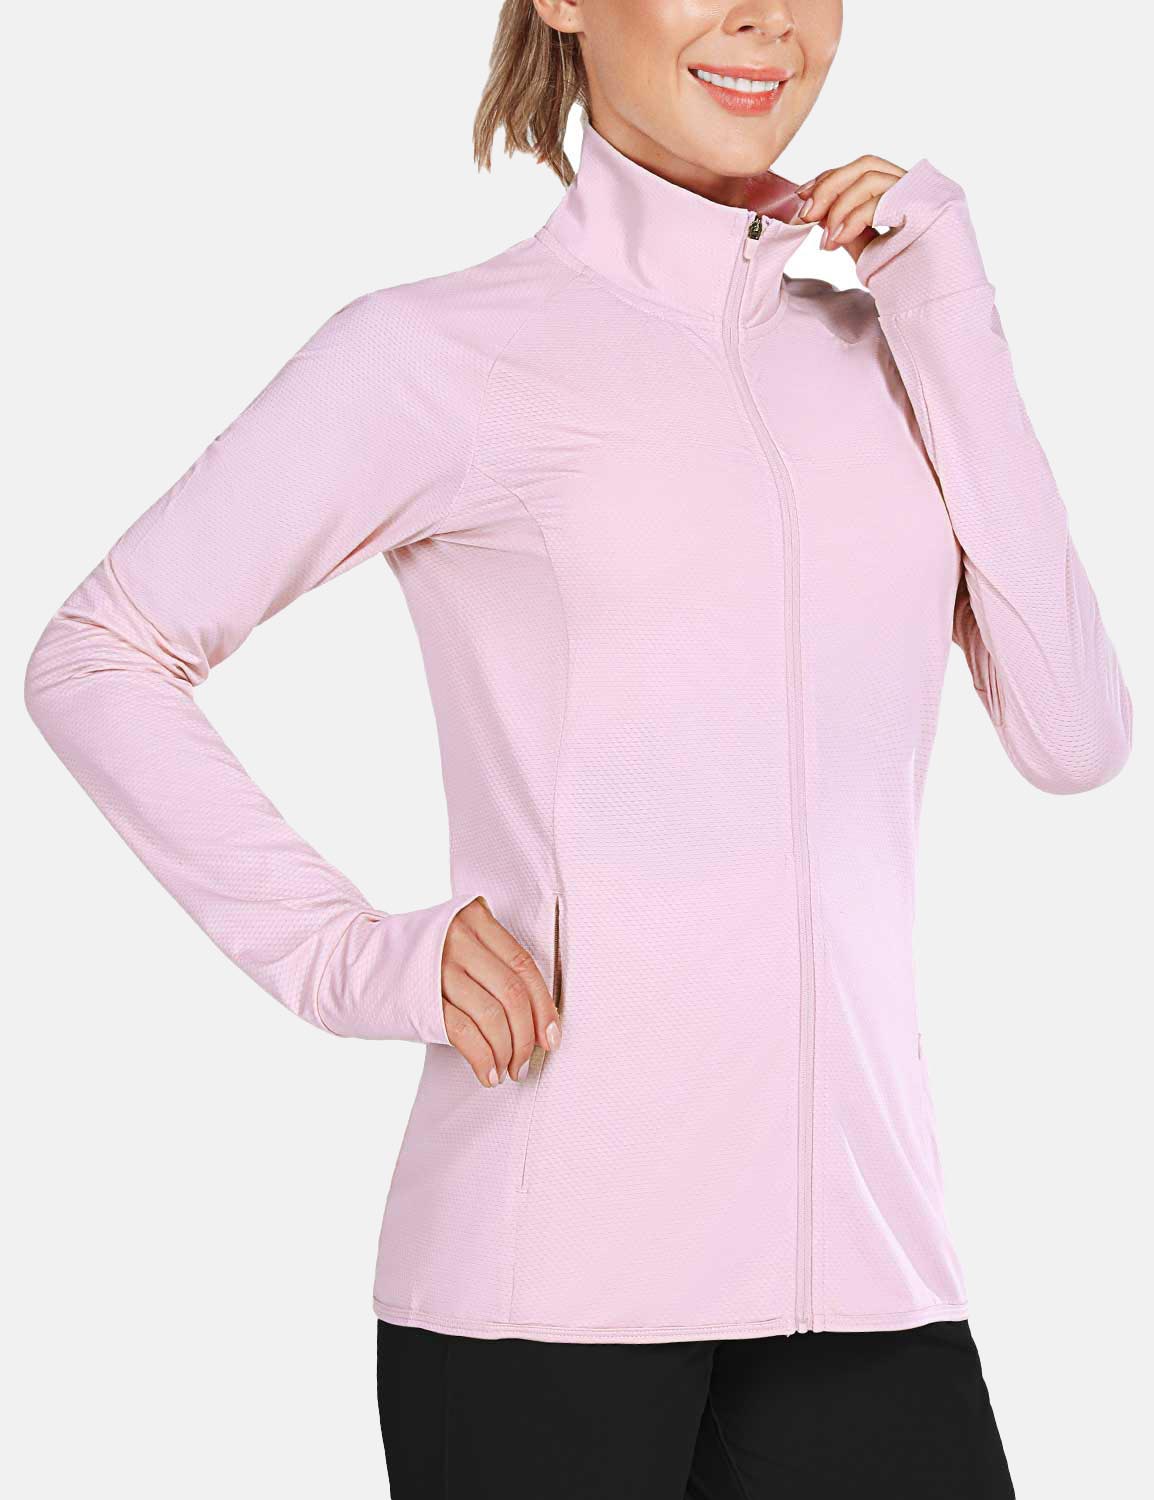 G4Free Women's UV Protection Jacket SPF Long Sleeve UPF 50+ Hiking